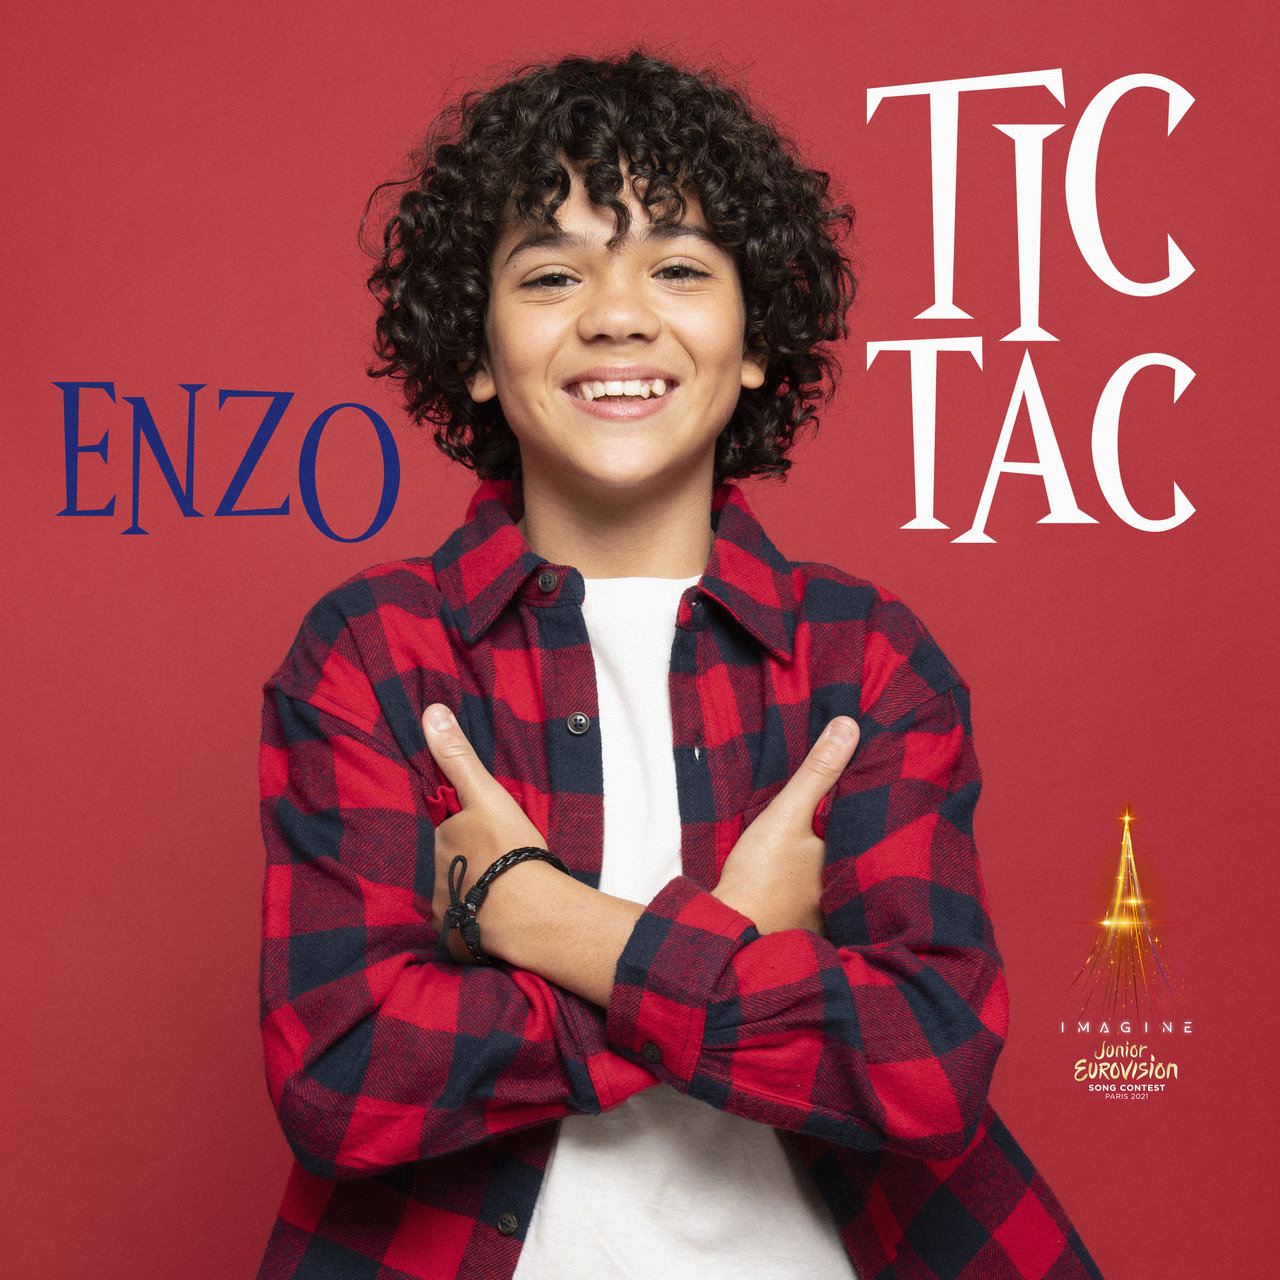 Enzo — Tic Tac cover artwork